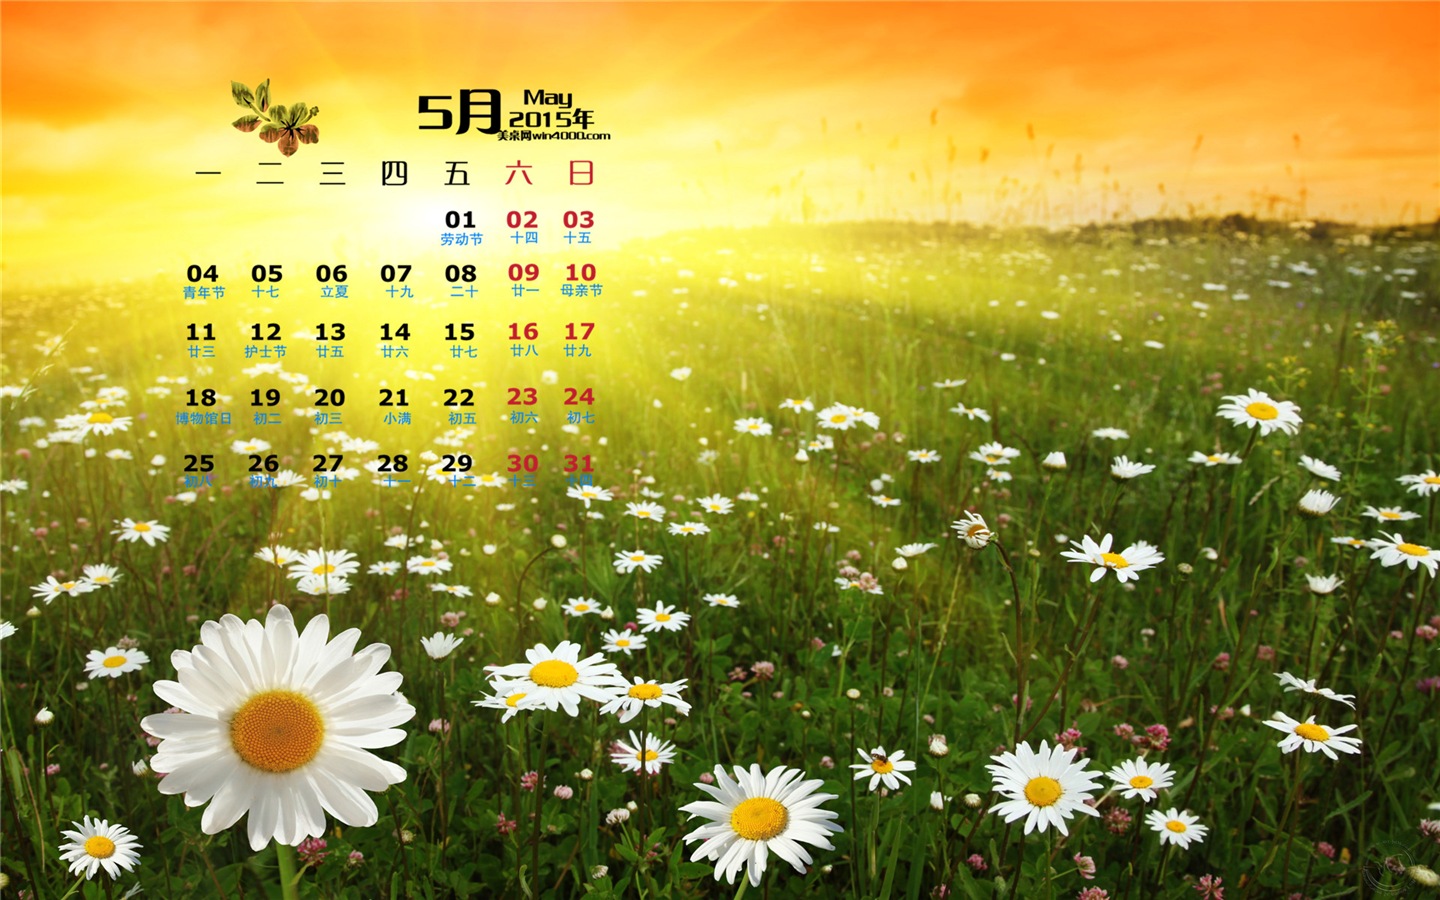 Mai 2015 calendar fond d'écran (1) #15 - 1440x900